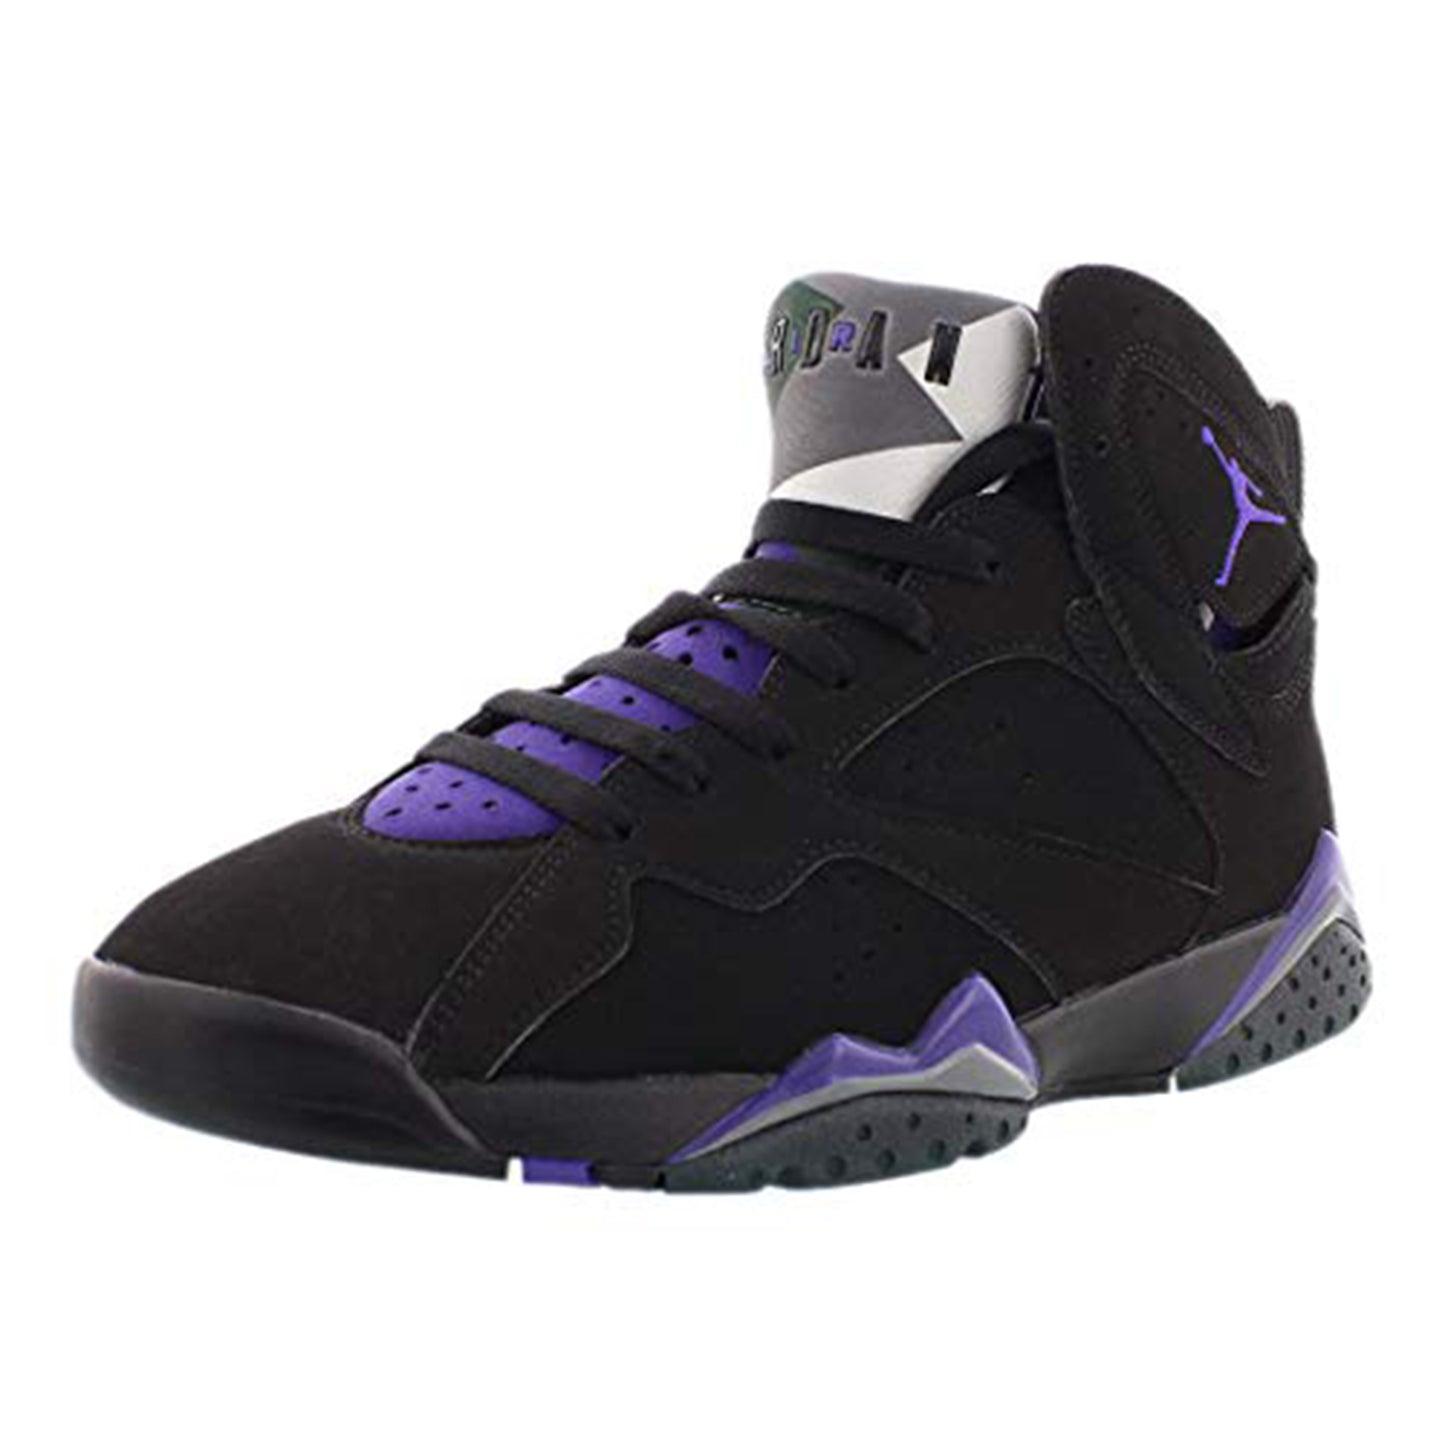 Air Jordan 7 Retro Ray Allen PE Size 10 - Men 304775-053 Black/Purple